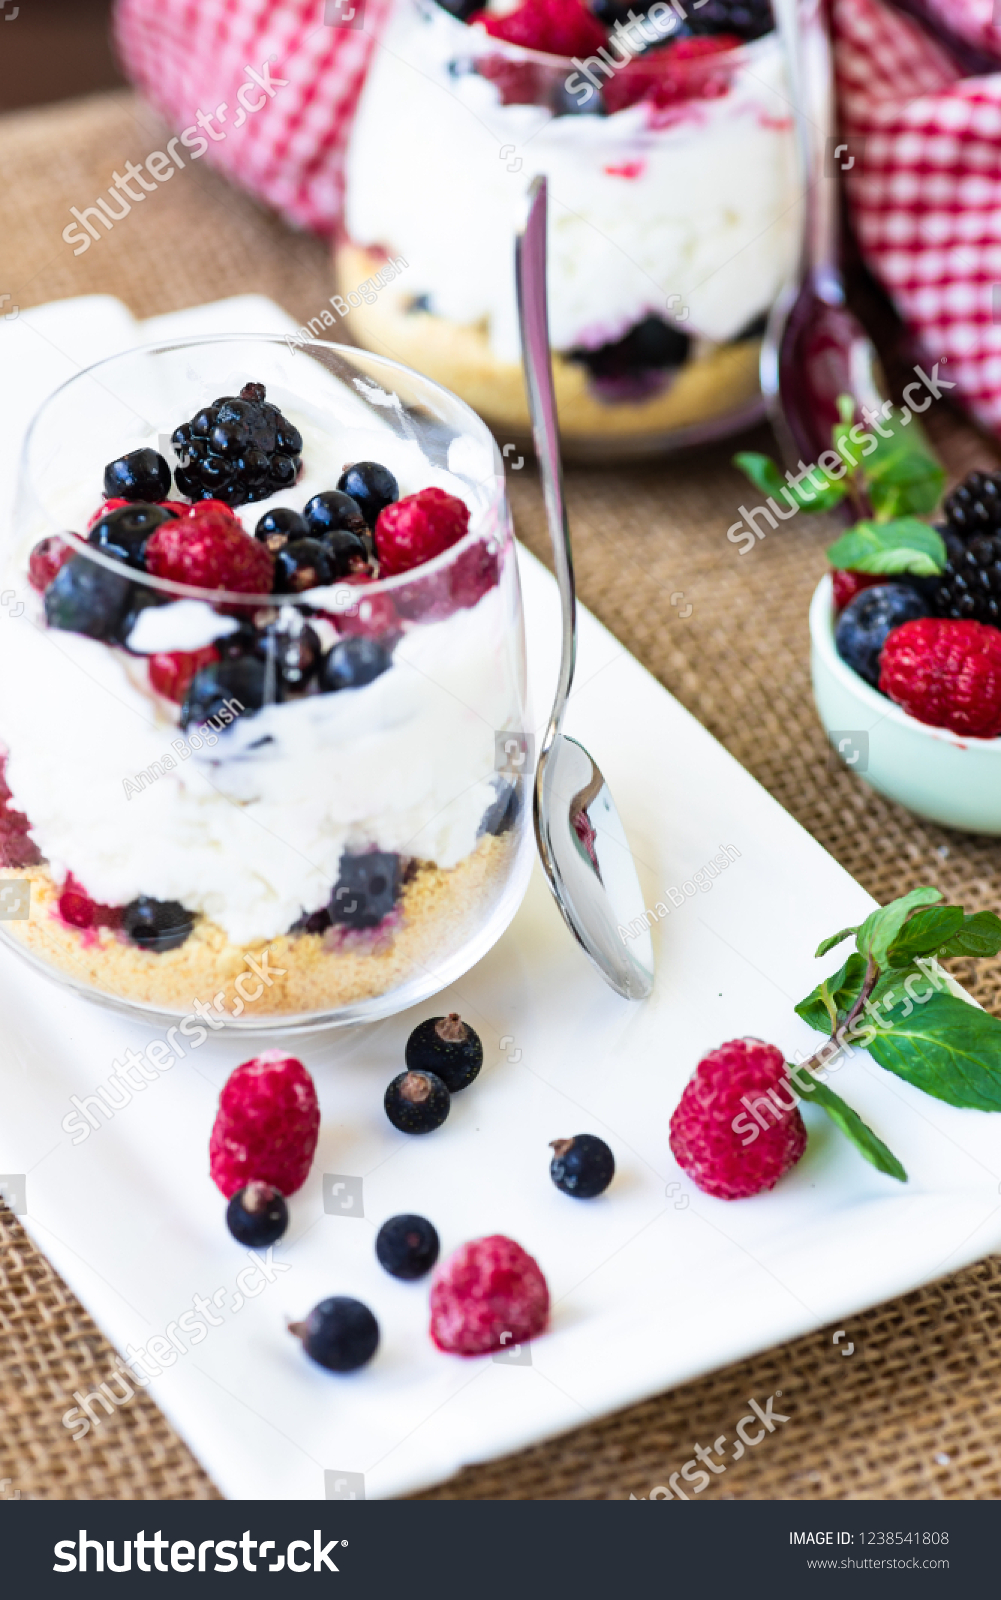 Yogurt dessert with granola and berries on rustic background #1238541808